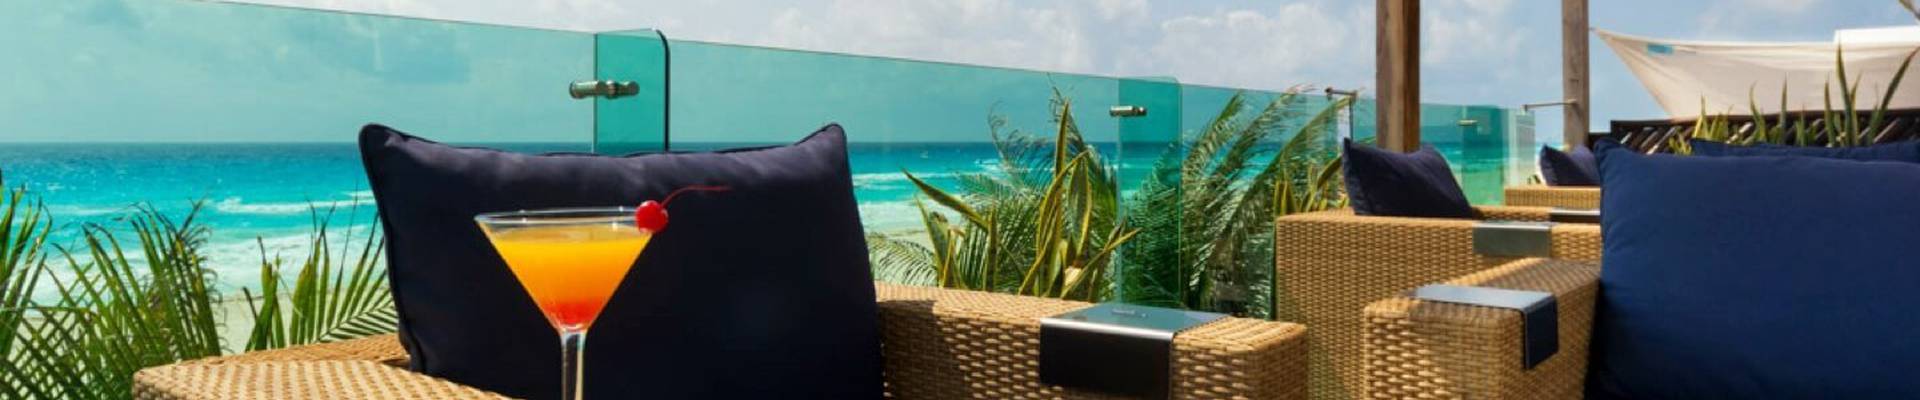 Flamingo Hotels - Cancun - 